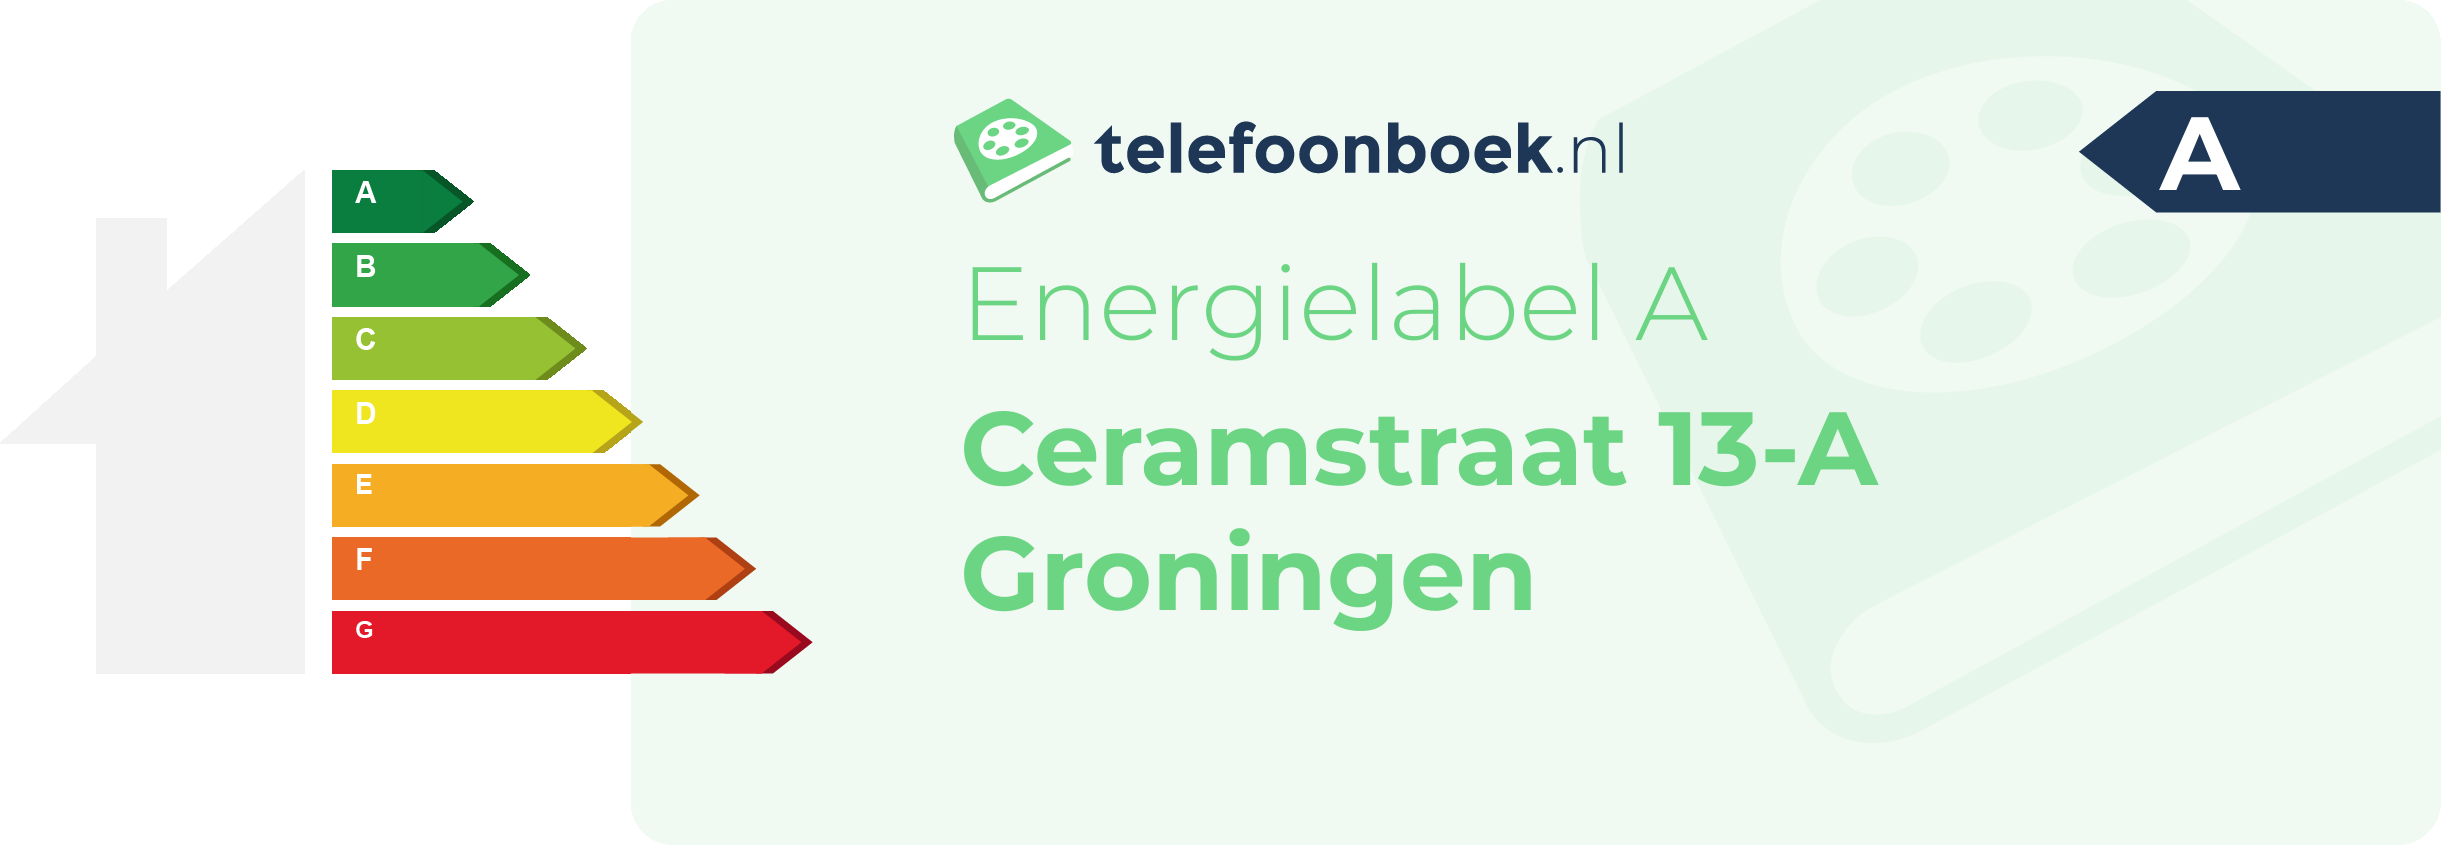 Energielabel Ceramstraat 13-A Groningen